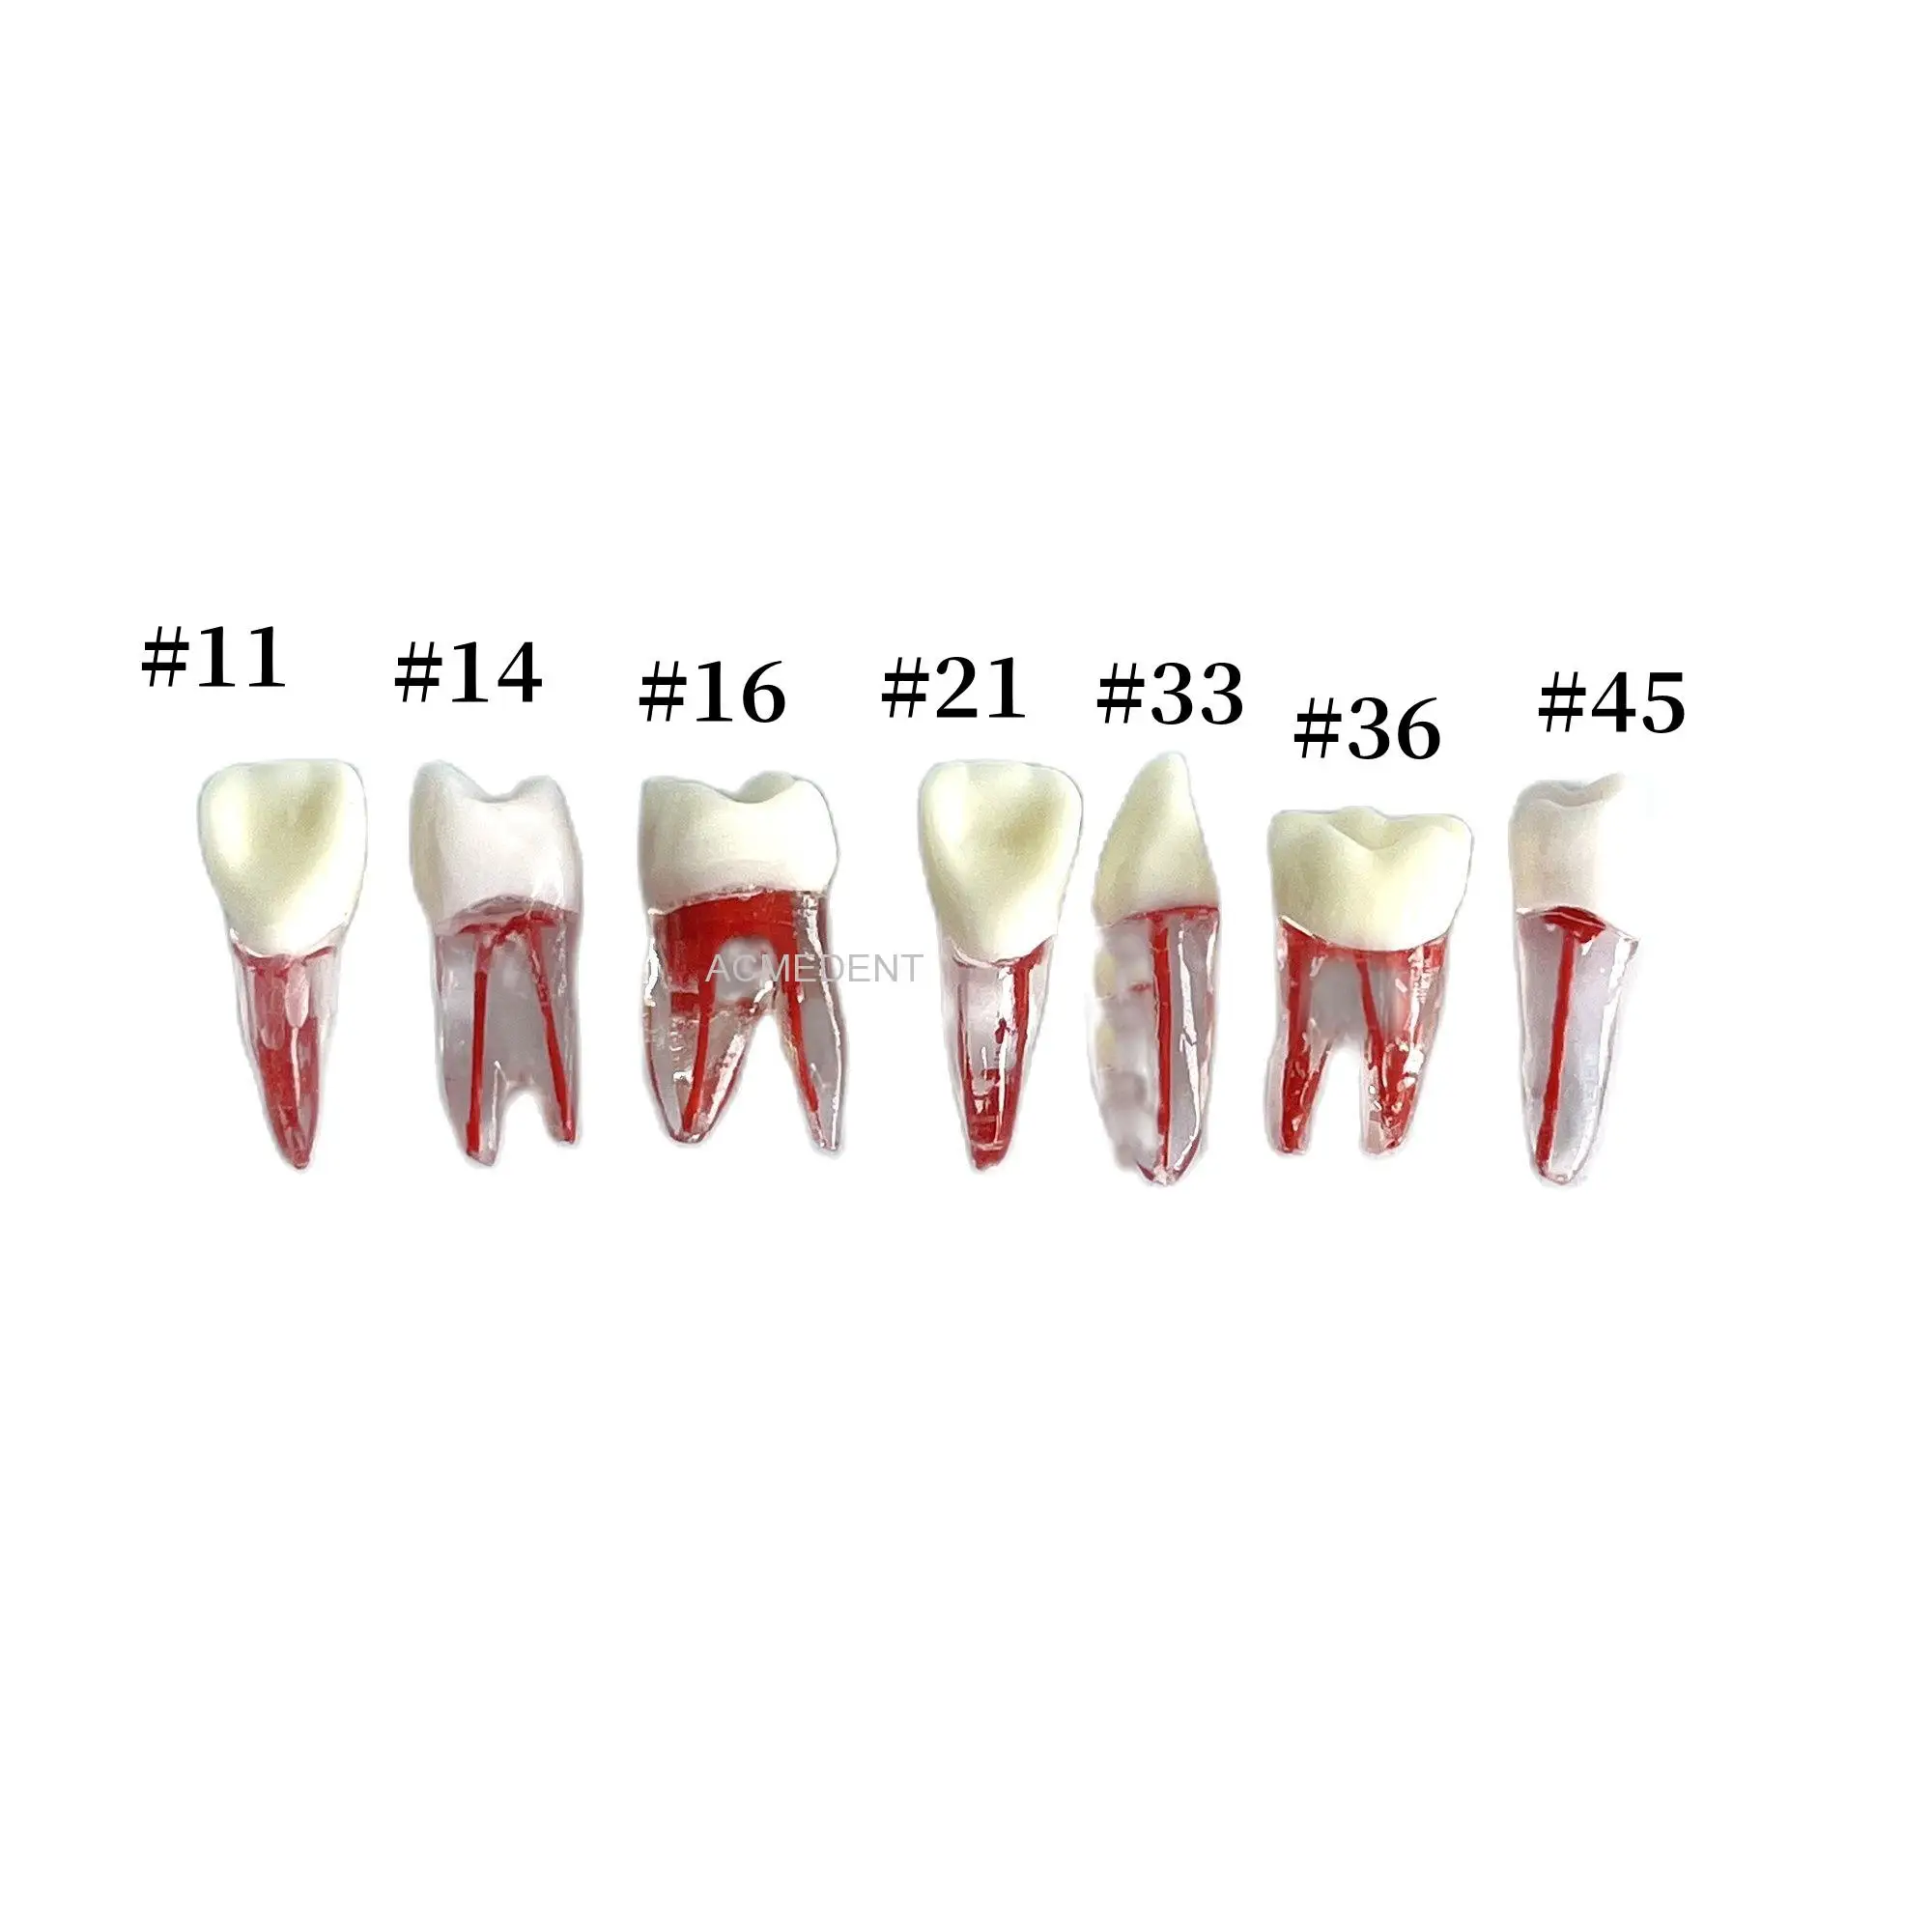 

20pcs Dental Endodontic Rotary Files Typodont Teeth Practice Study Model Root Canal Pulp Cavity Endo RCT Training Blocks